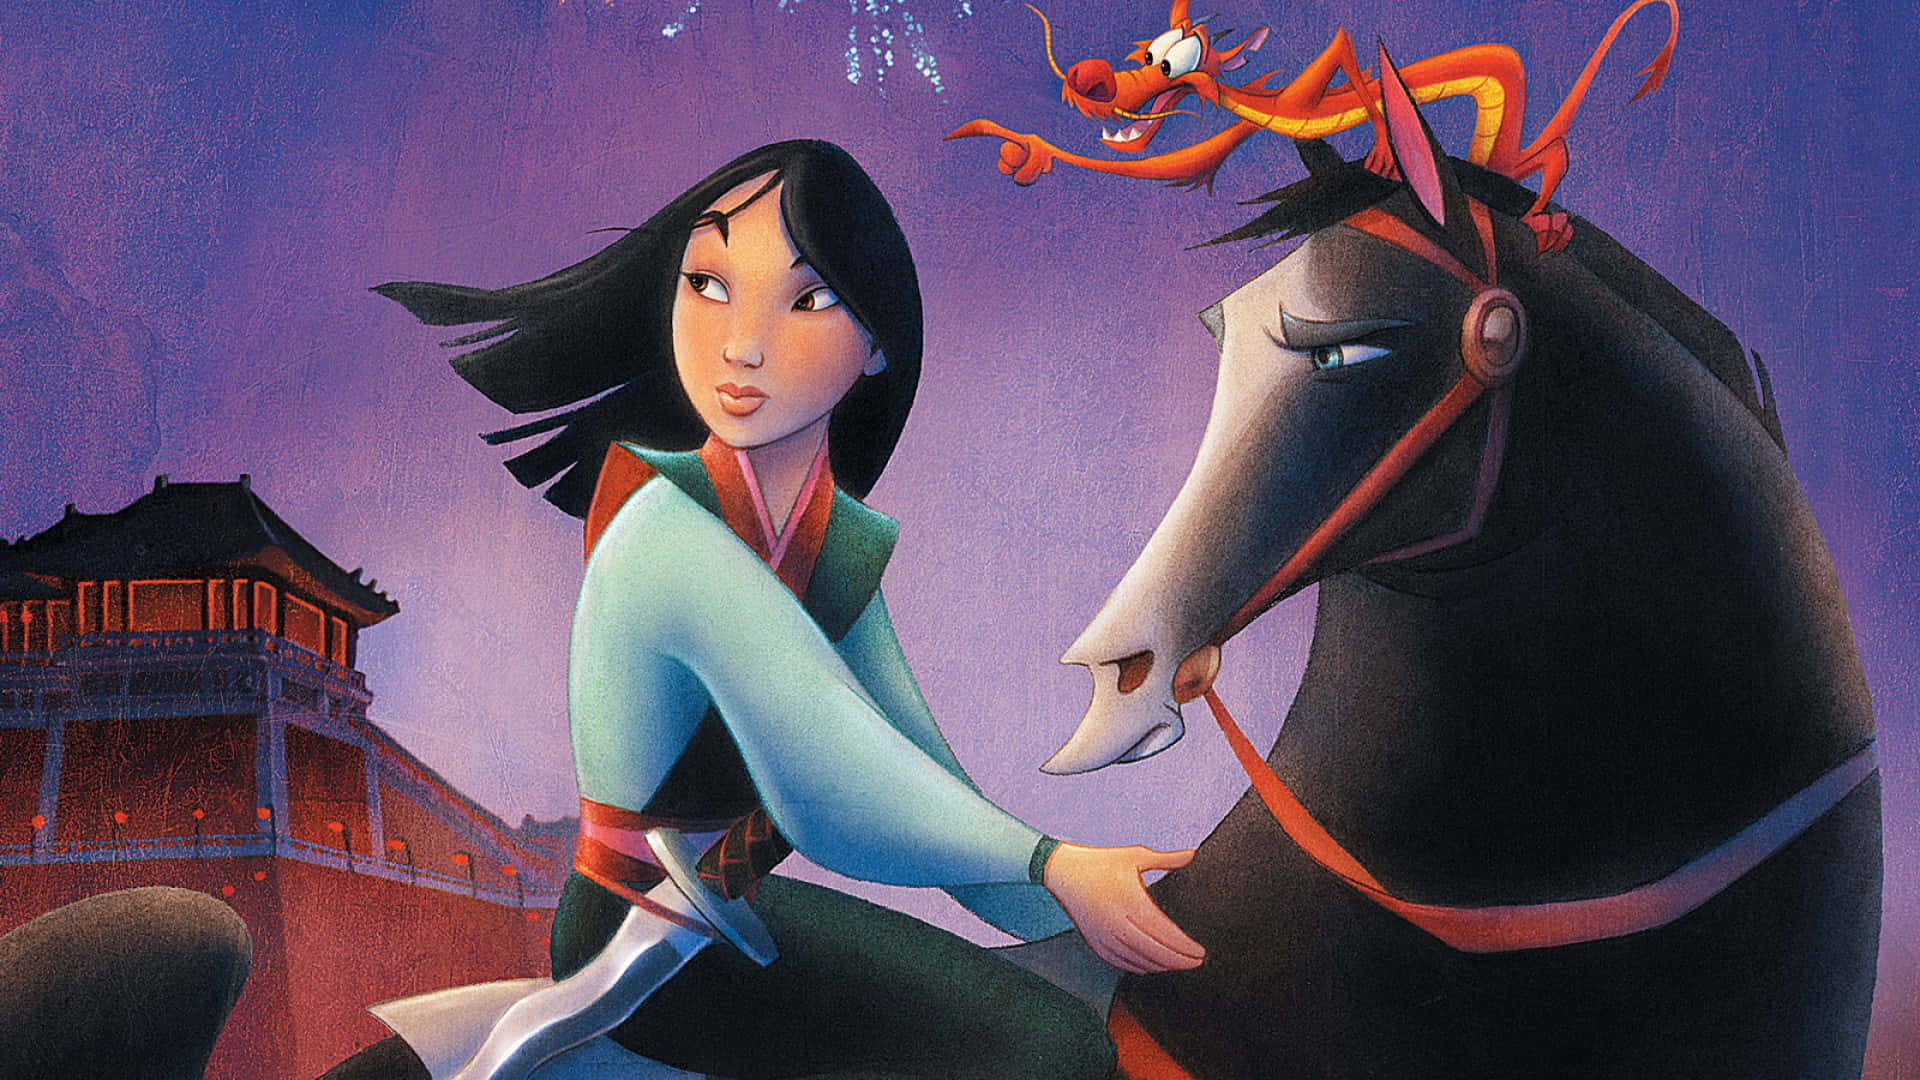 Mulan seeks her own path